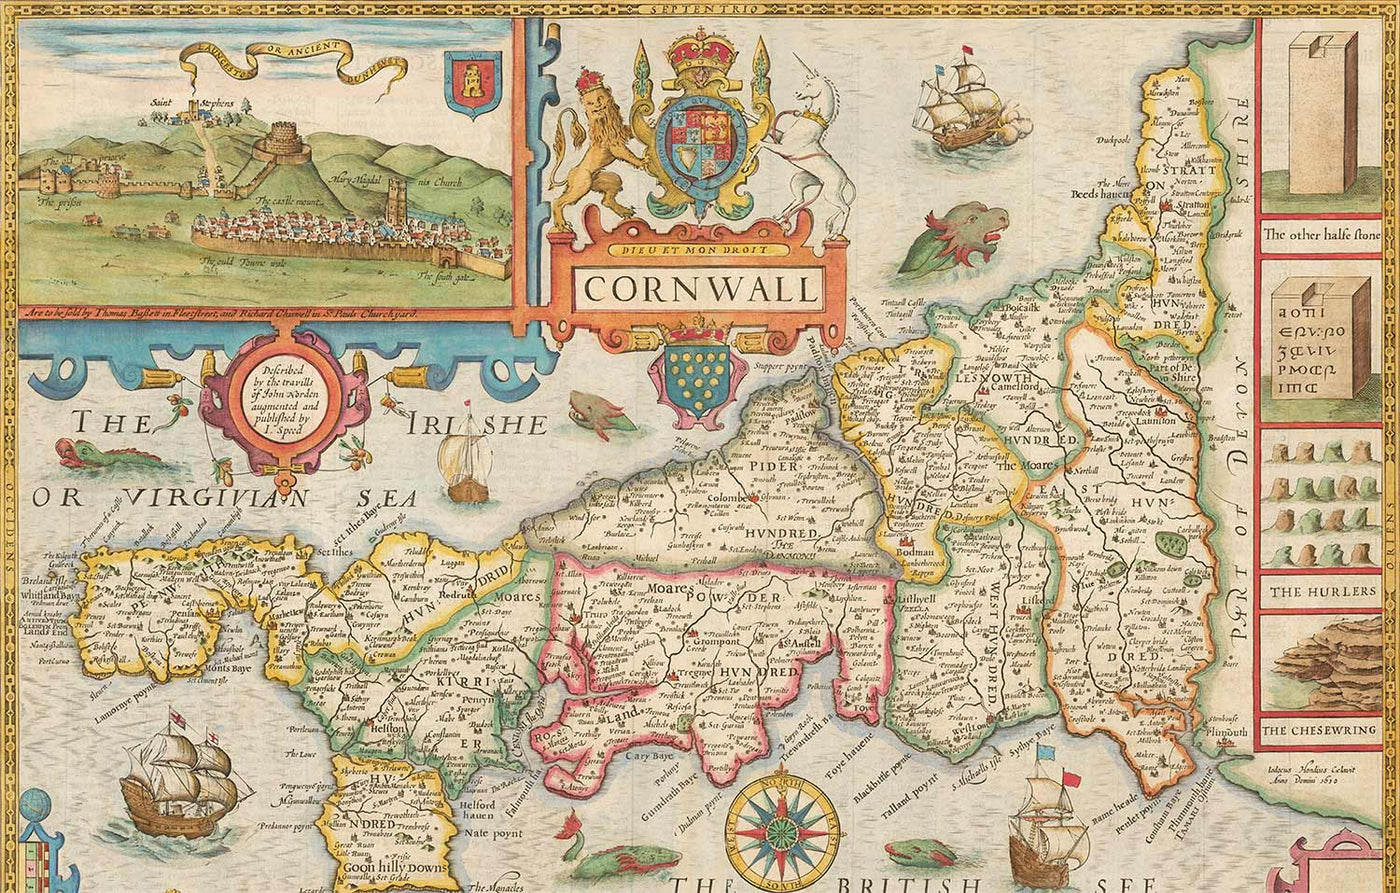 John Speed Maps: County Maps & World Maps, 1611 to 1627